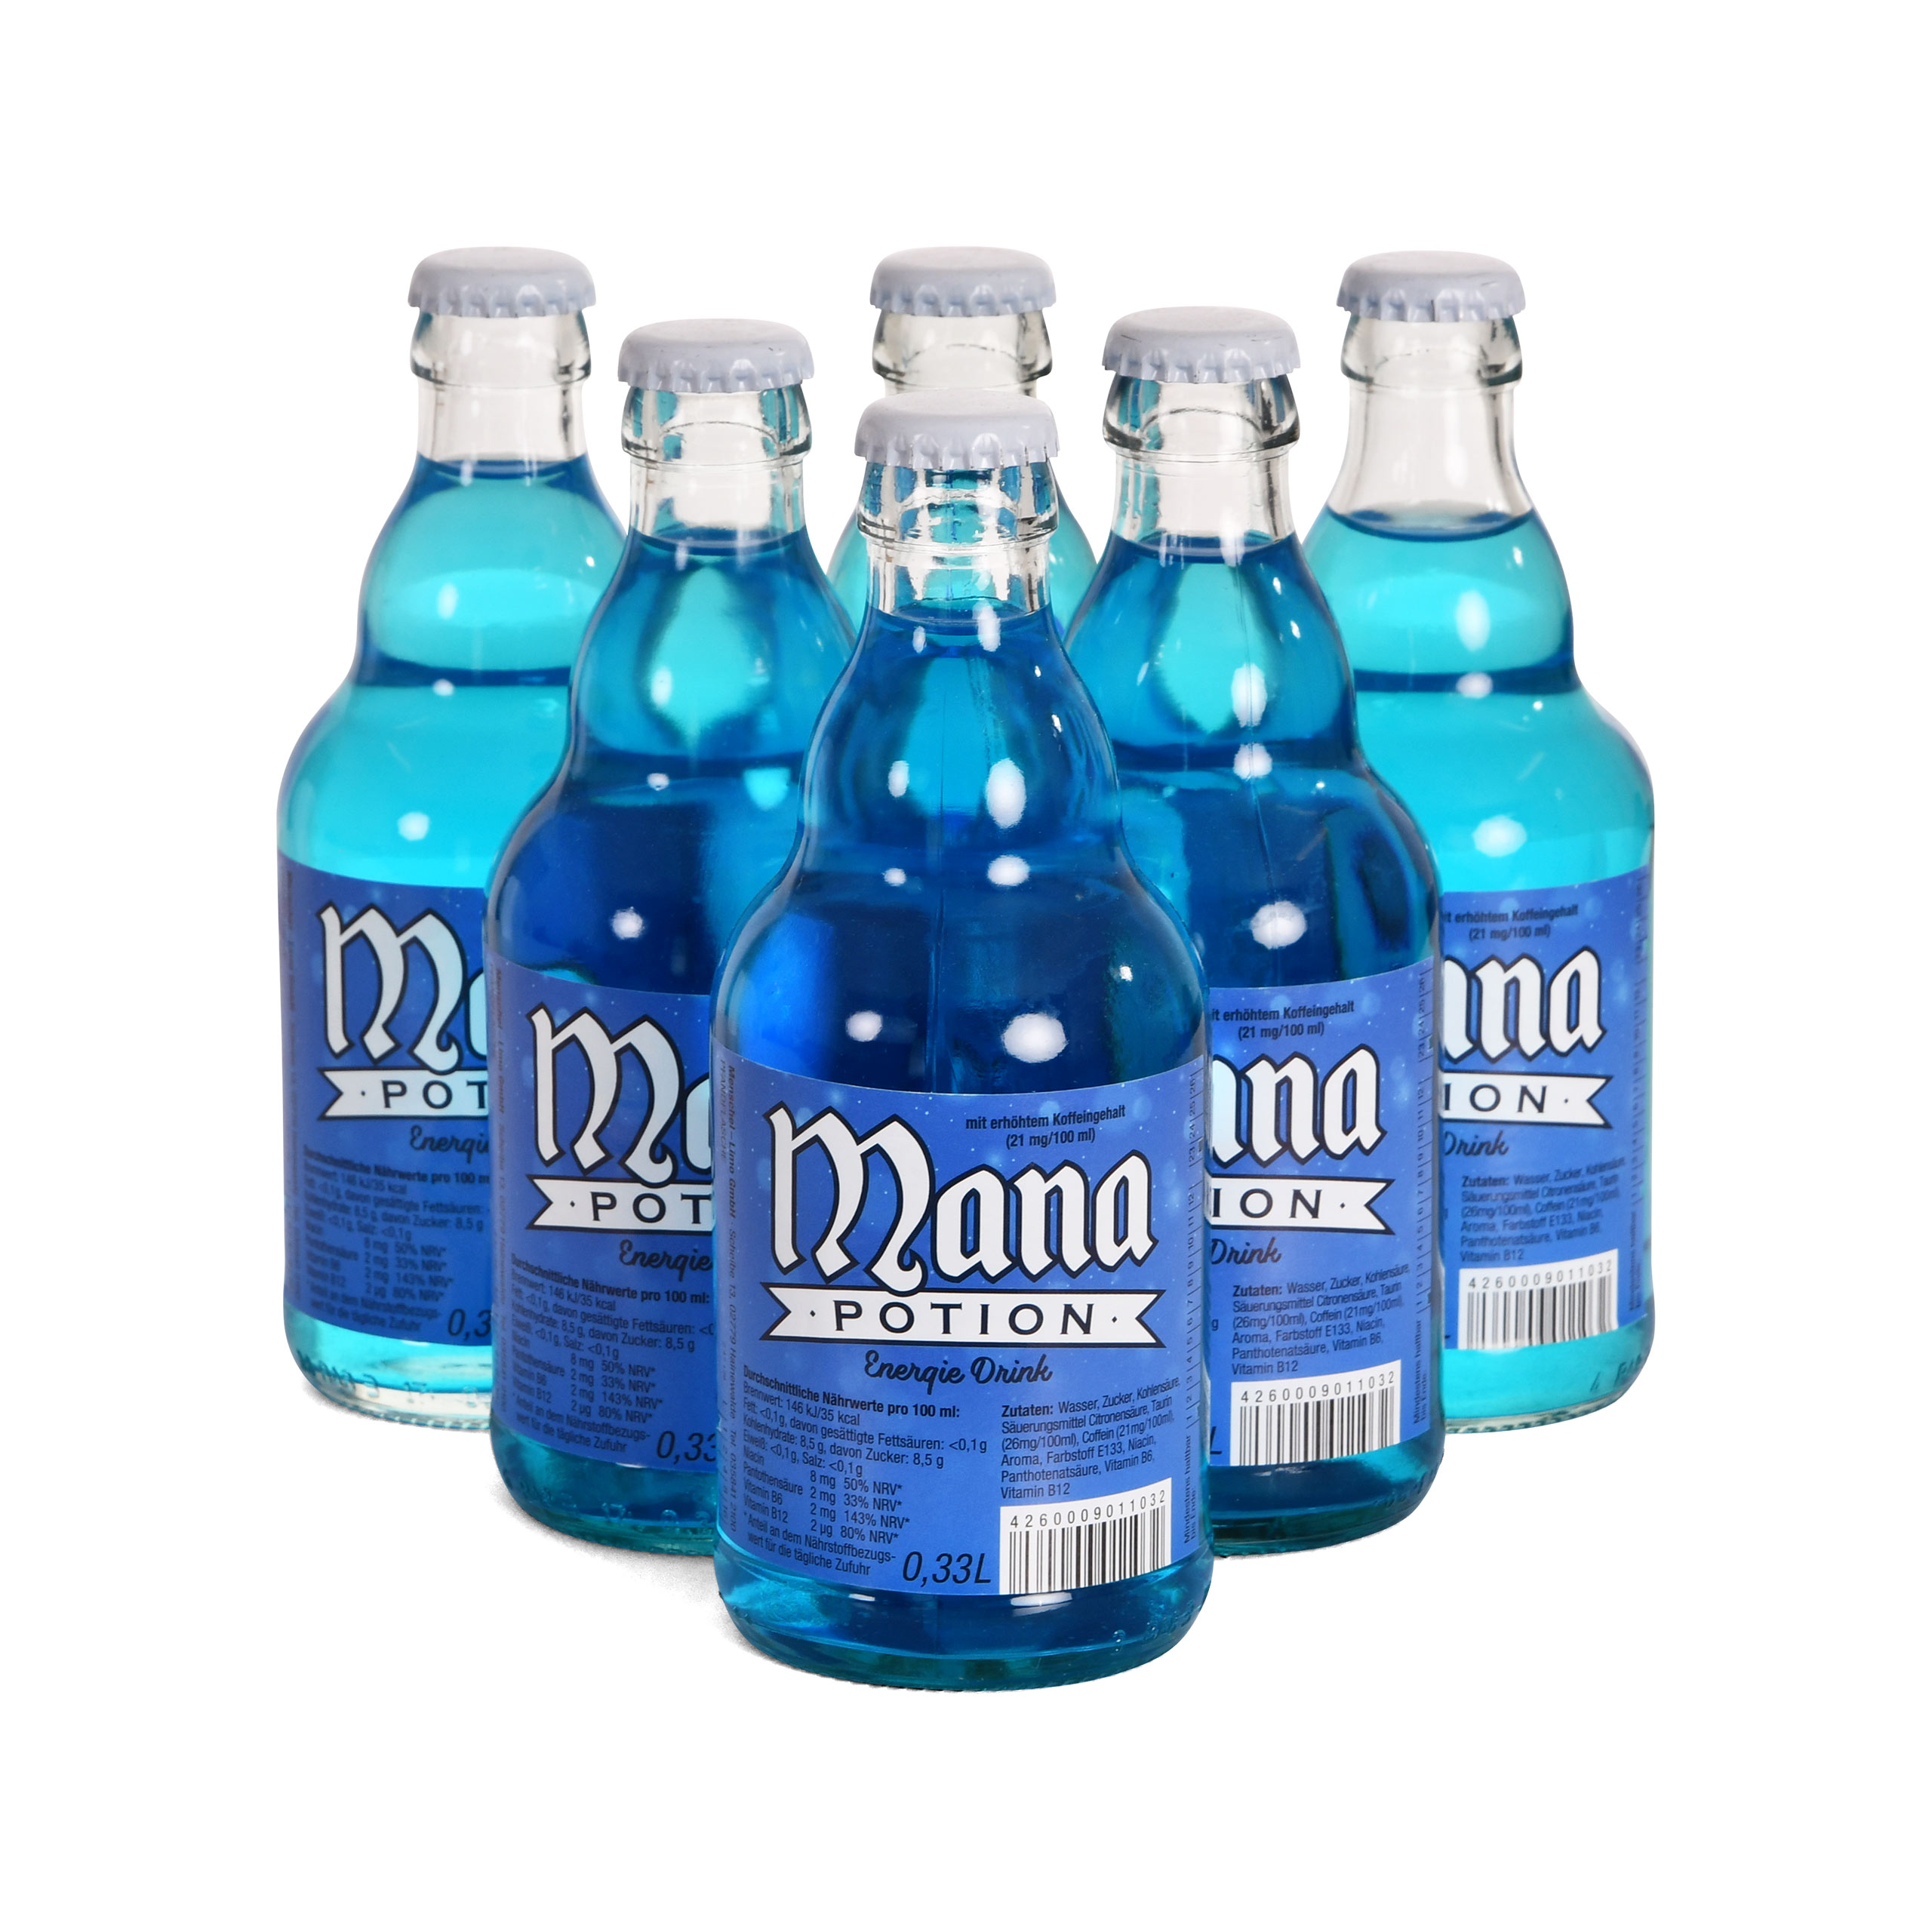 Mana Potion Bottle Energy Drink - 6 Pack